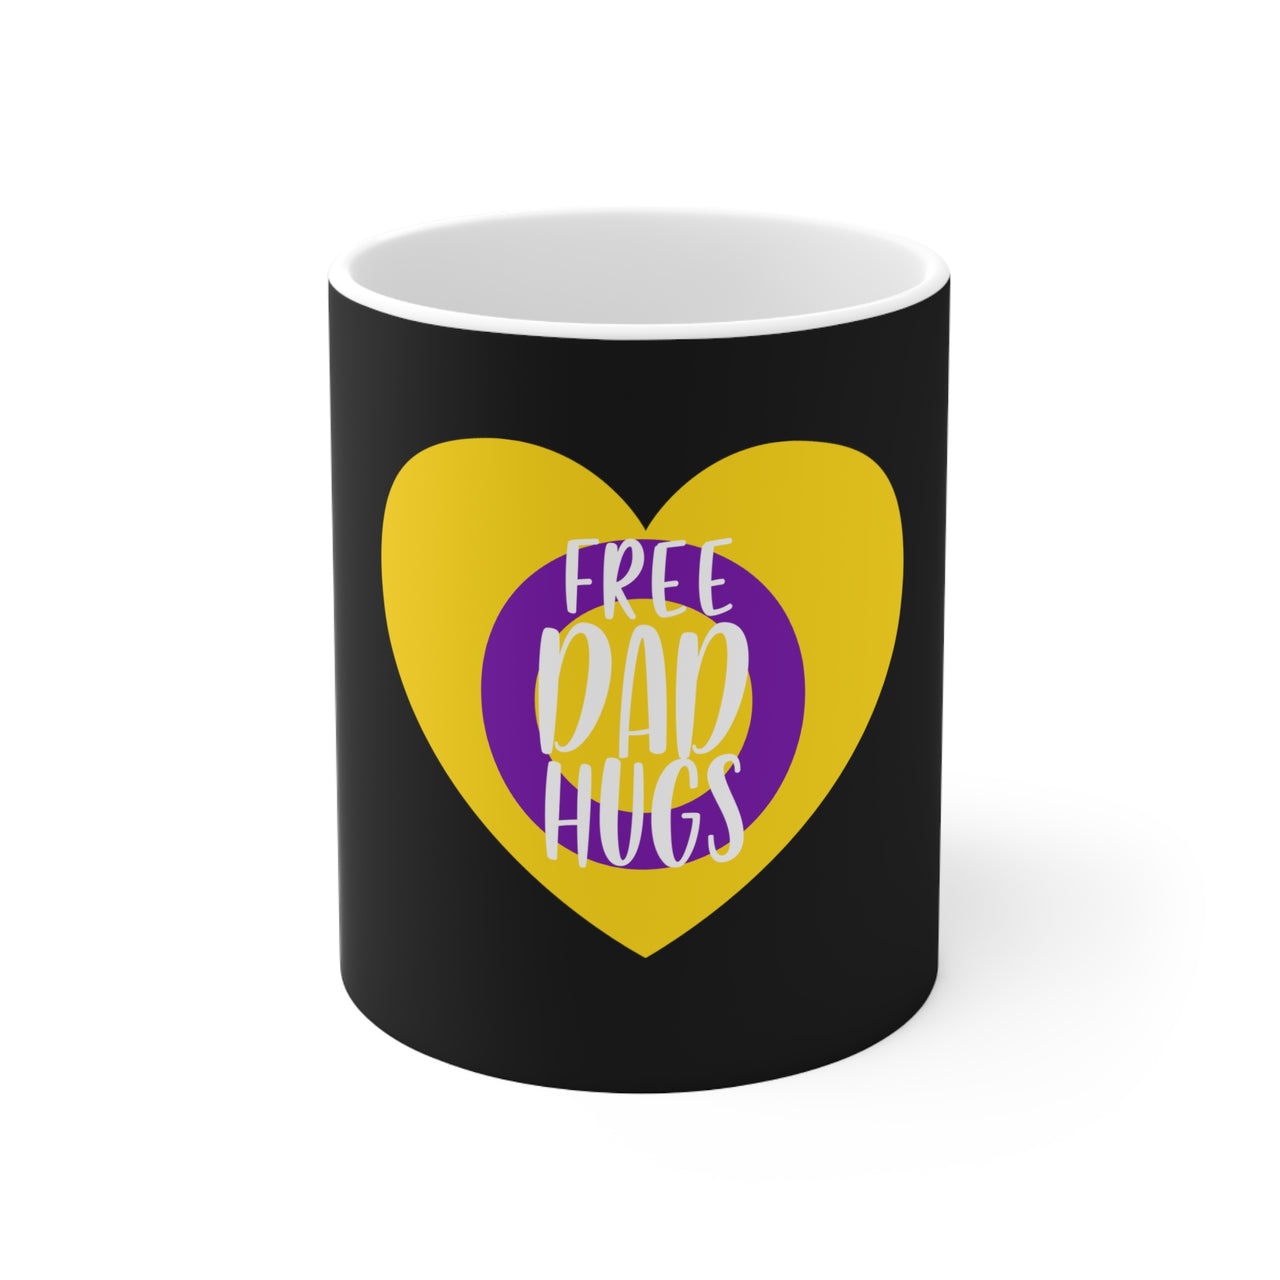 Intersexual Pride Flag Ceramic Mug - Free Dad Hugs Printify